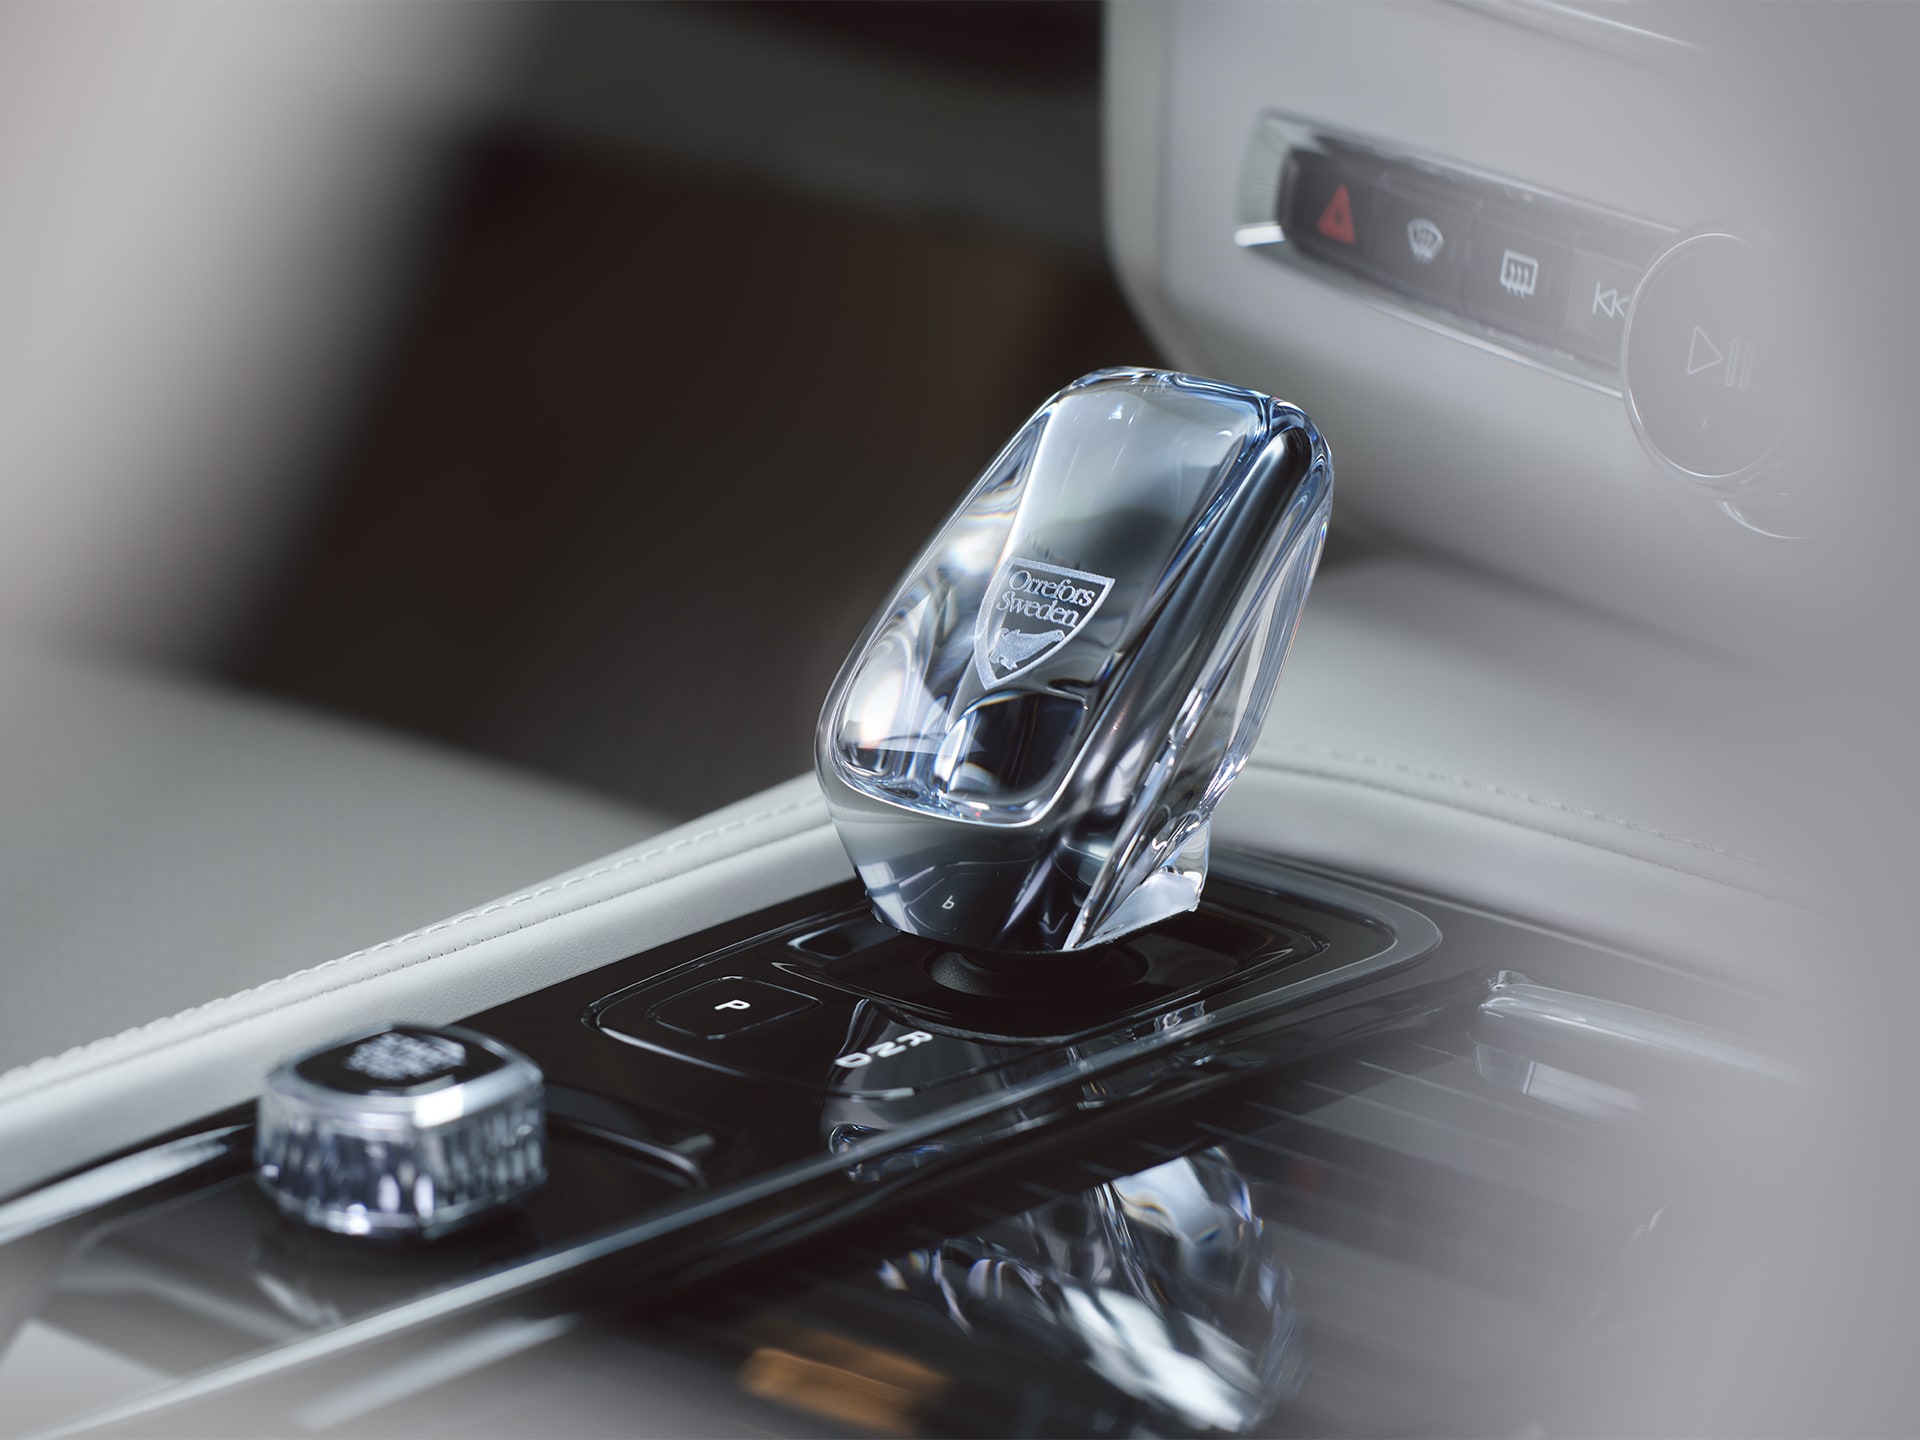 Alavanca da caixa de velocidades em cristal sueco genuíno da Orrefors Sedan Volvo S90 Recharge.